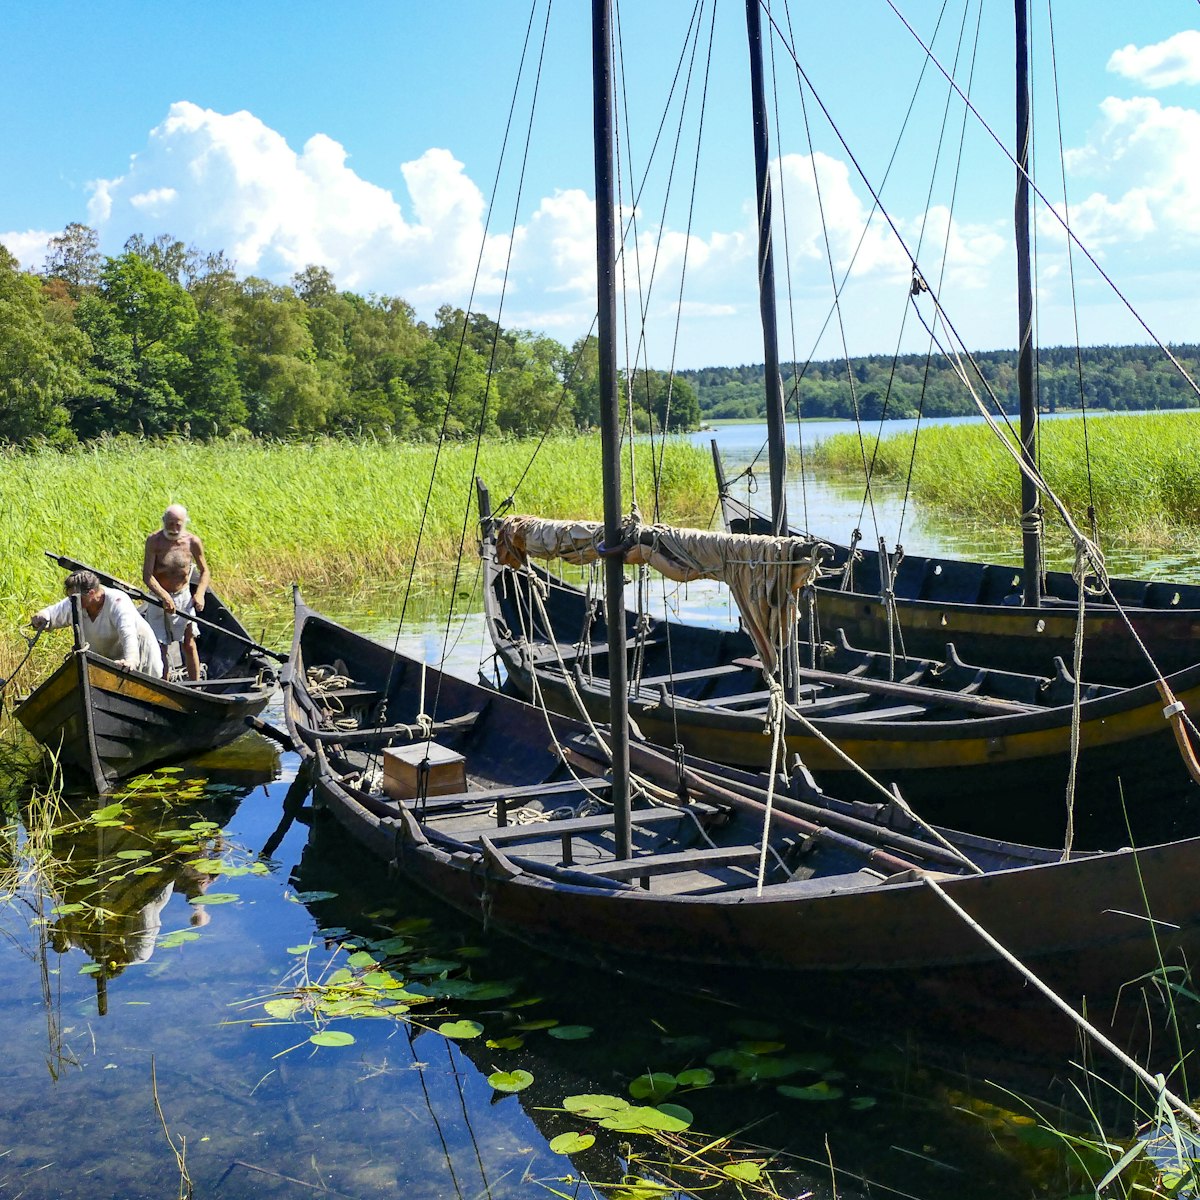 Viking long ships in the harbor at the Viking settlement of Birka in Lake Malaren.